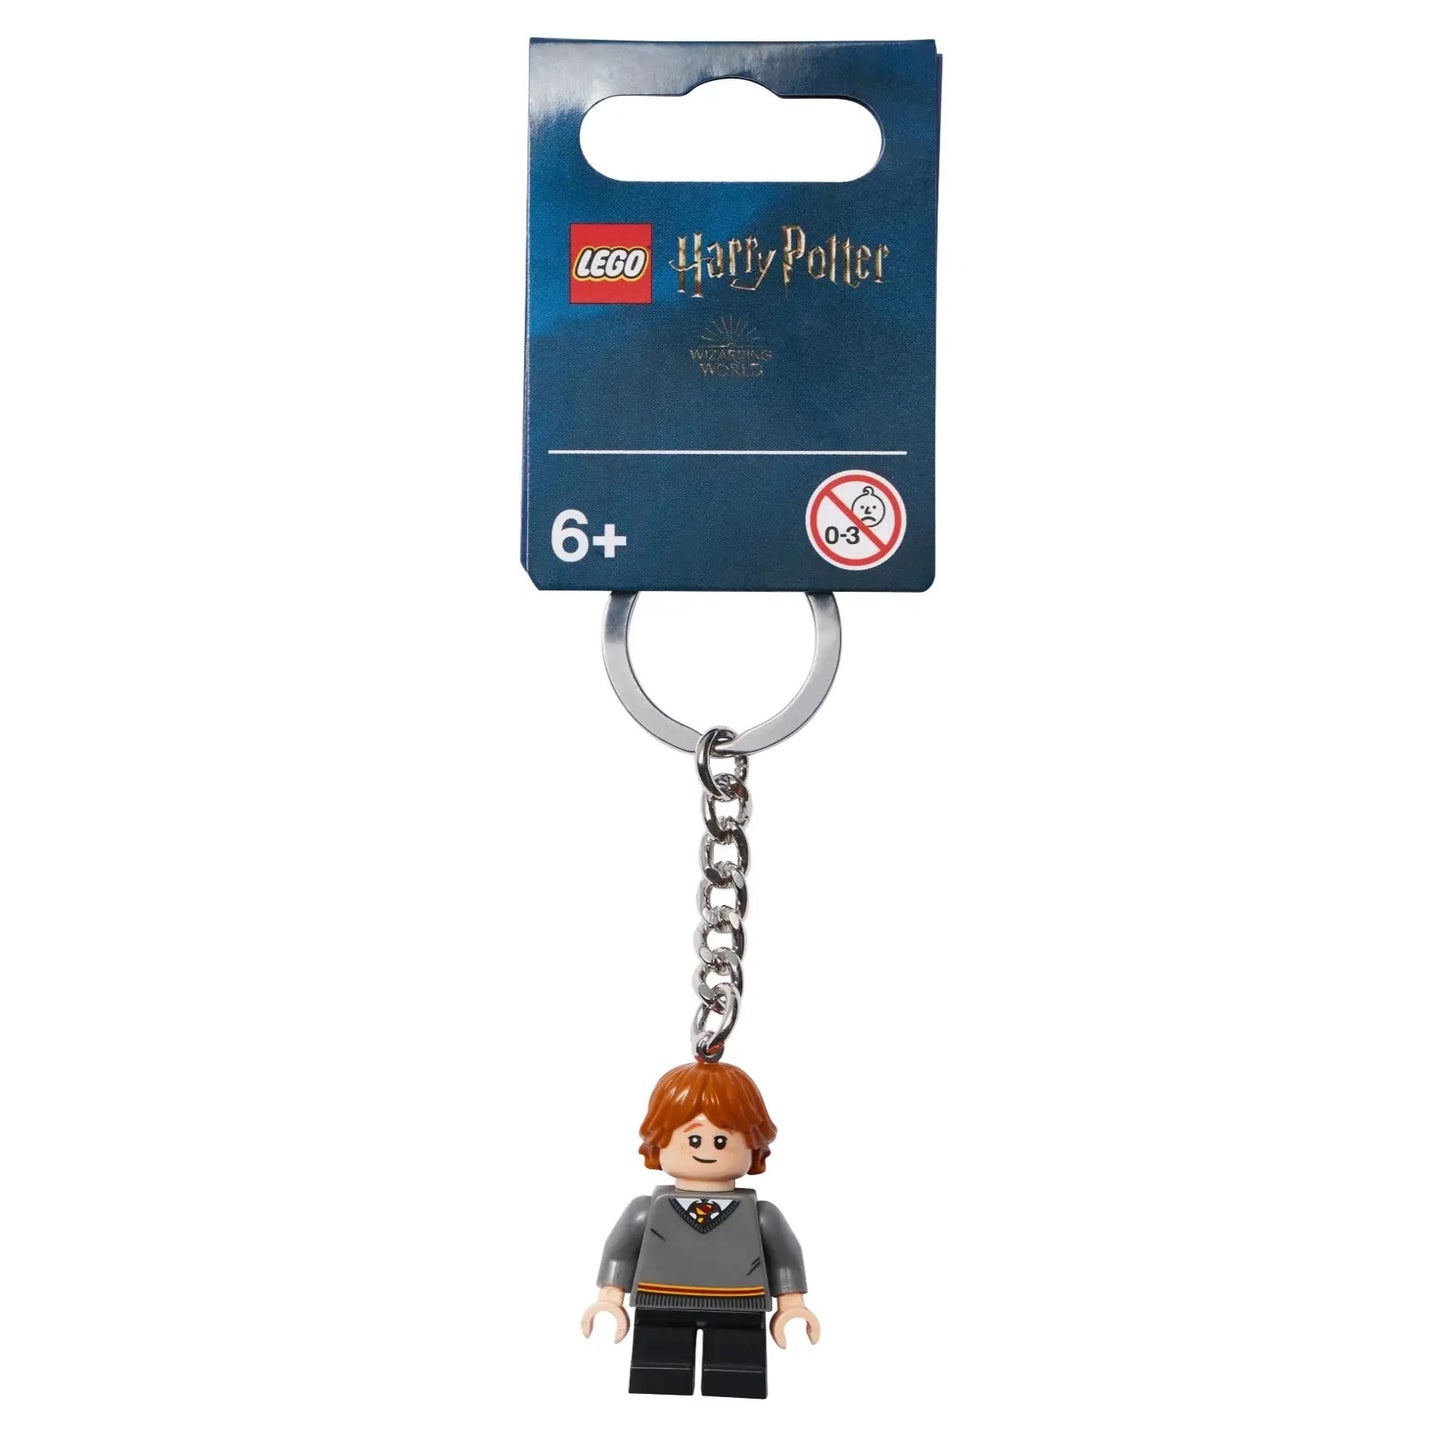 LEGO® Harry Potter Key chain